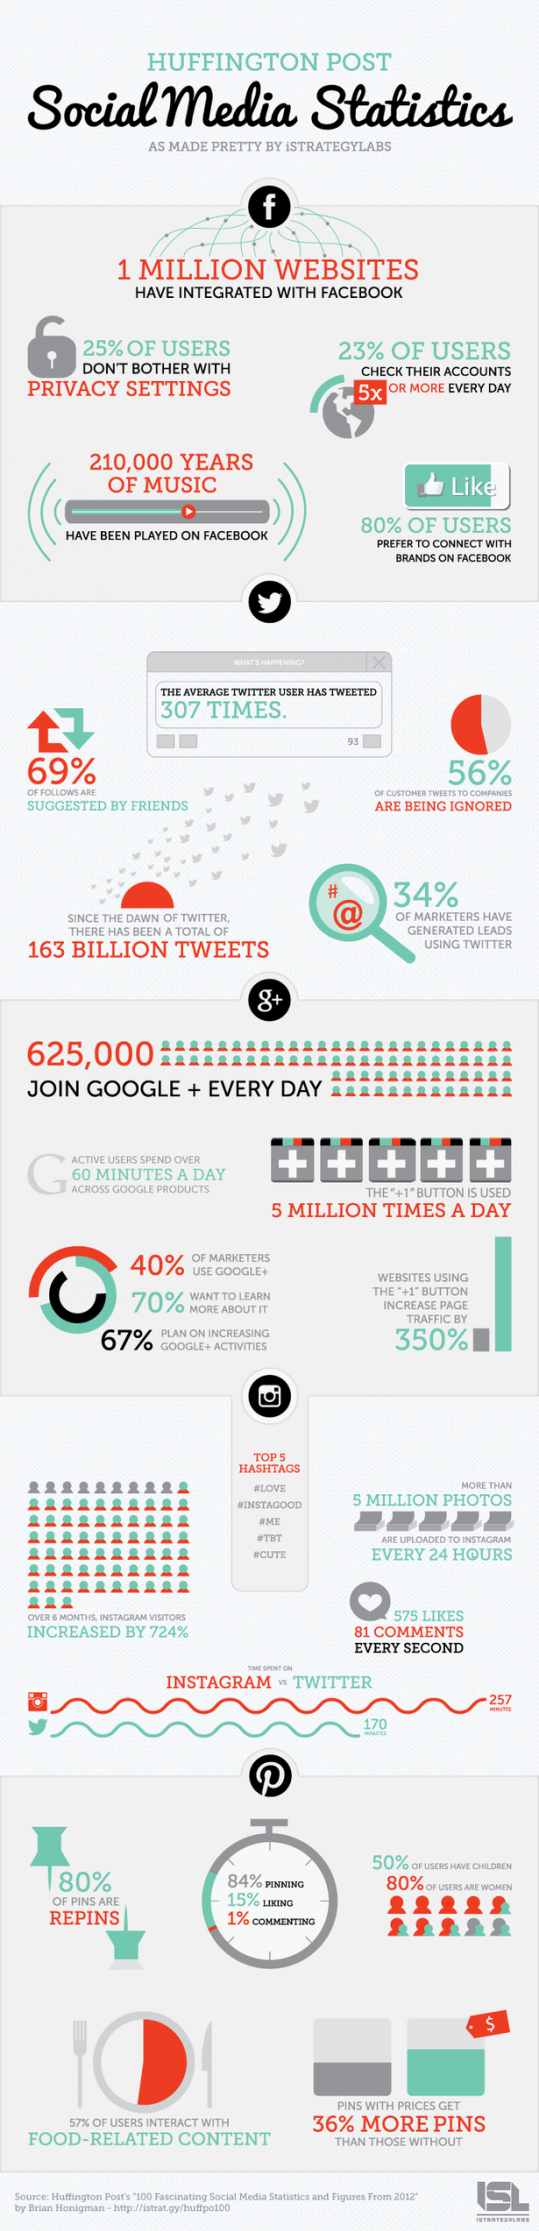 social_media_infographic_2012-stats